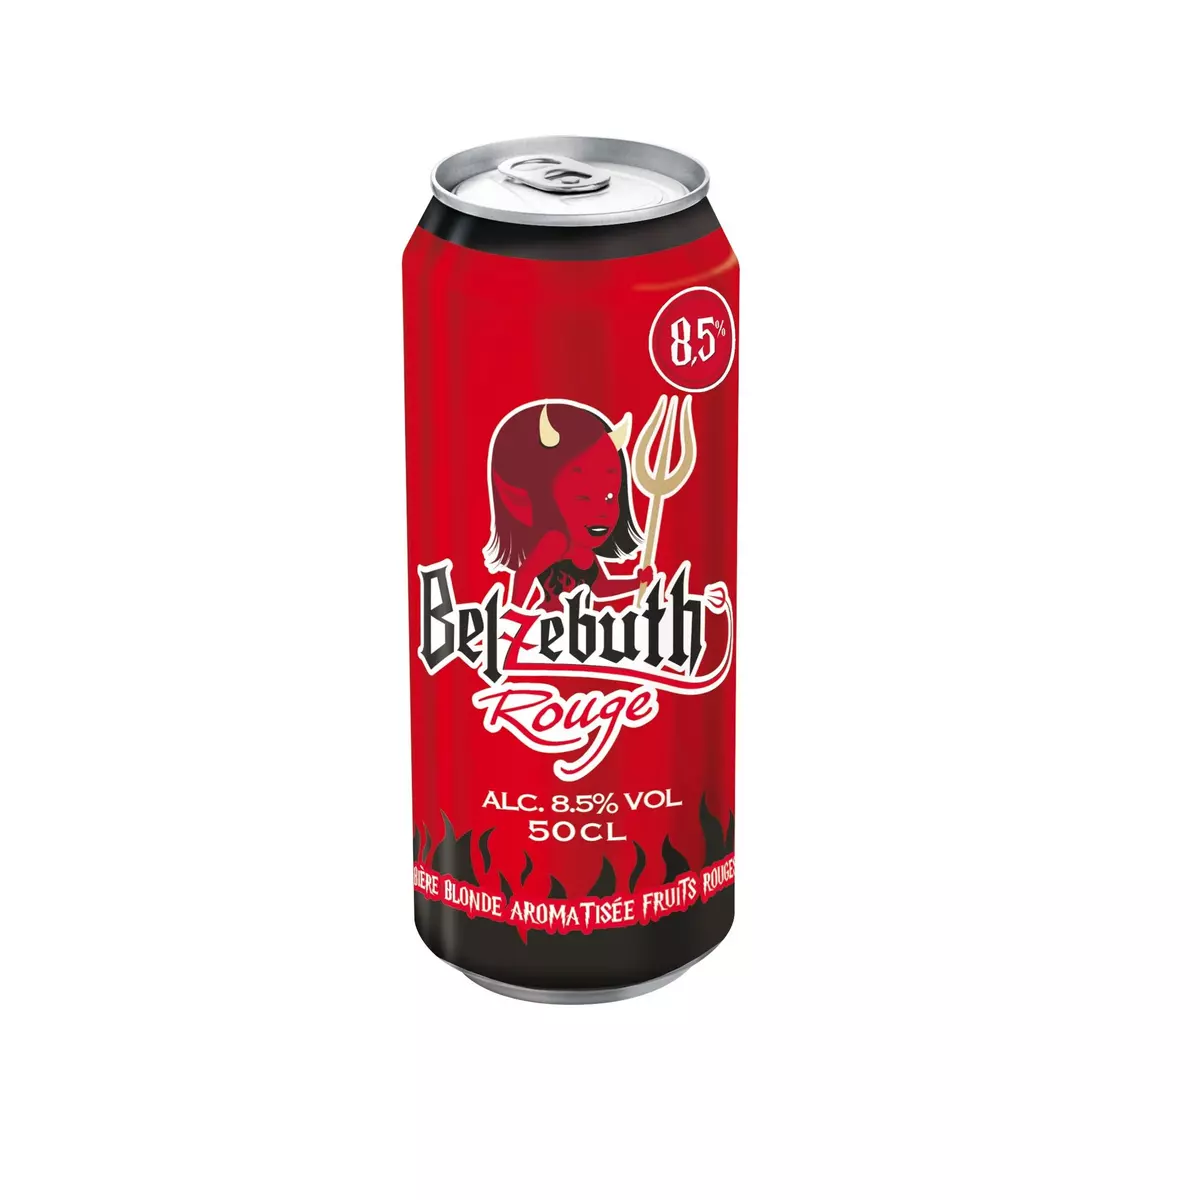 BELZEBUTH Bière rouge 8.5% 50cl